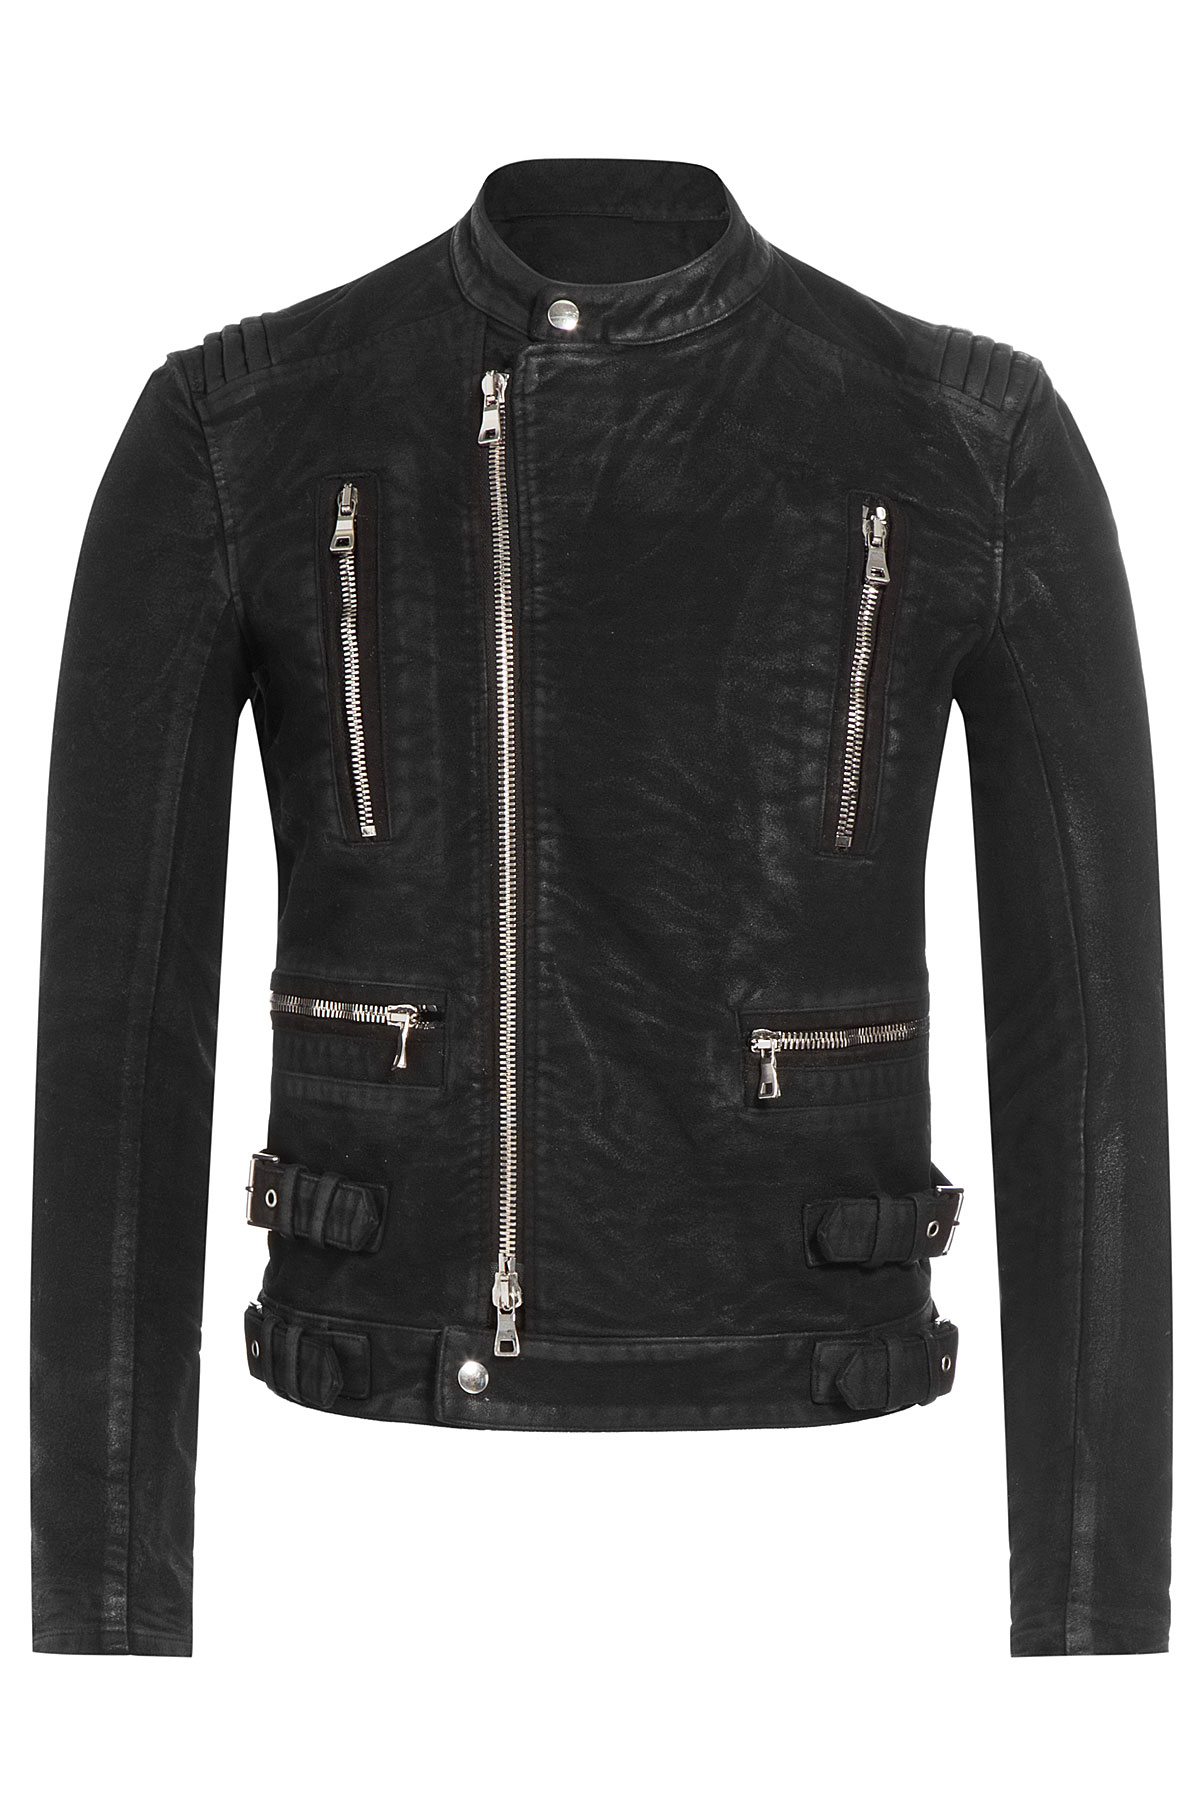 Balmain Cotton Biker Jacket - Black in Black for Men - Lyst